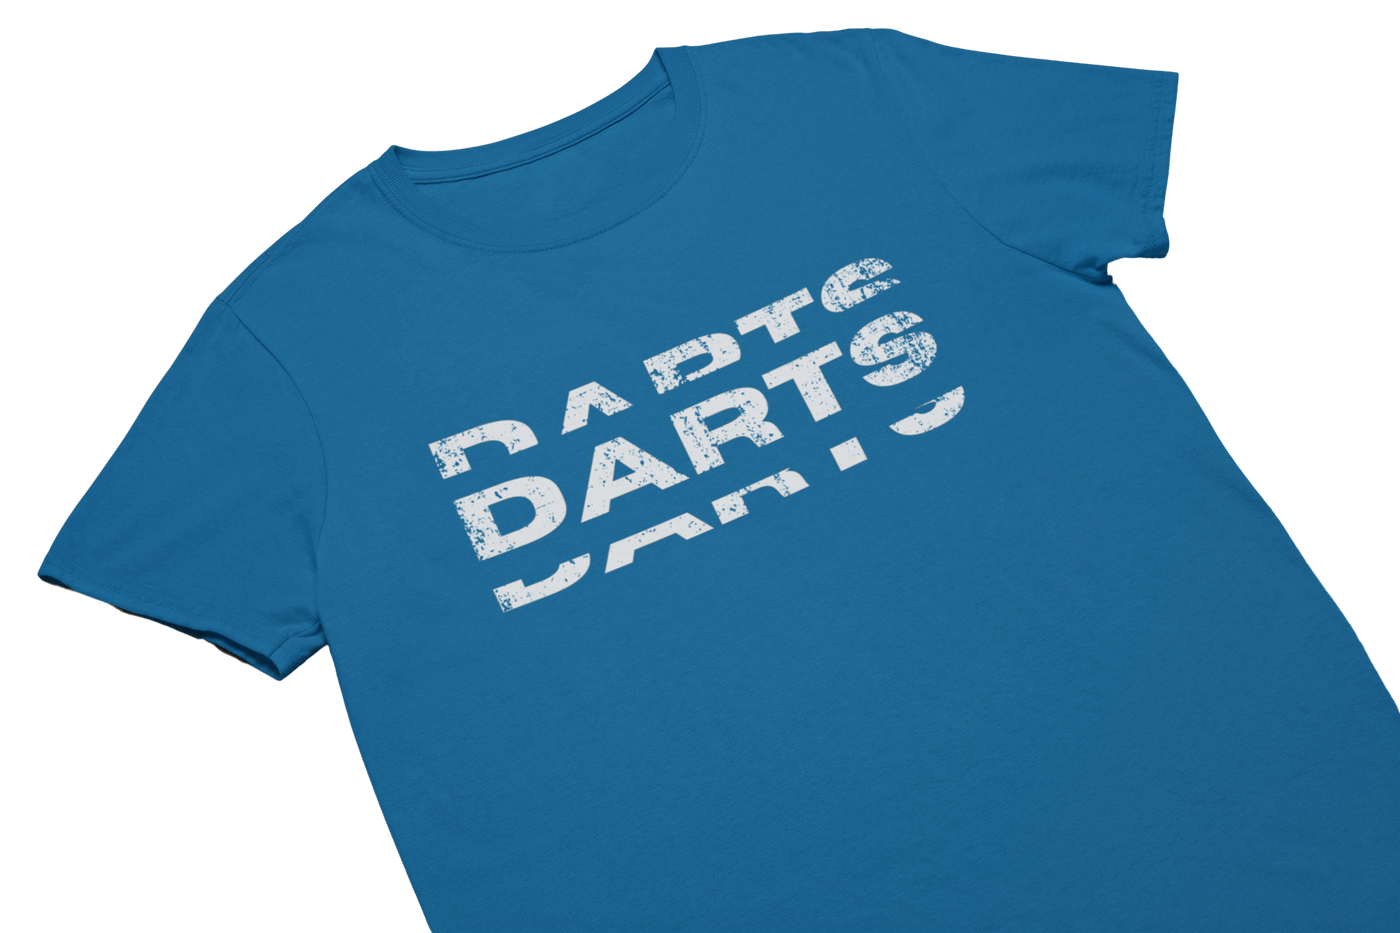 DARTS DARTS DARTS - T-Shirt Blau